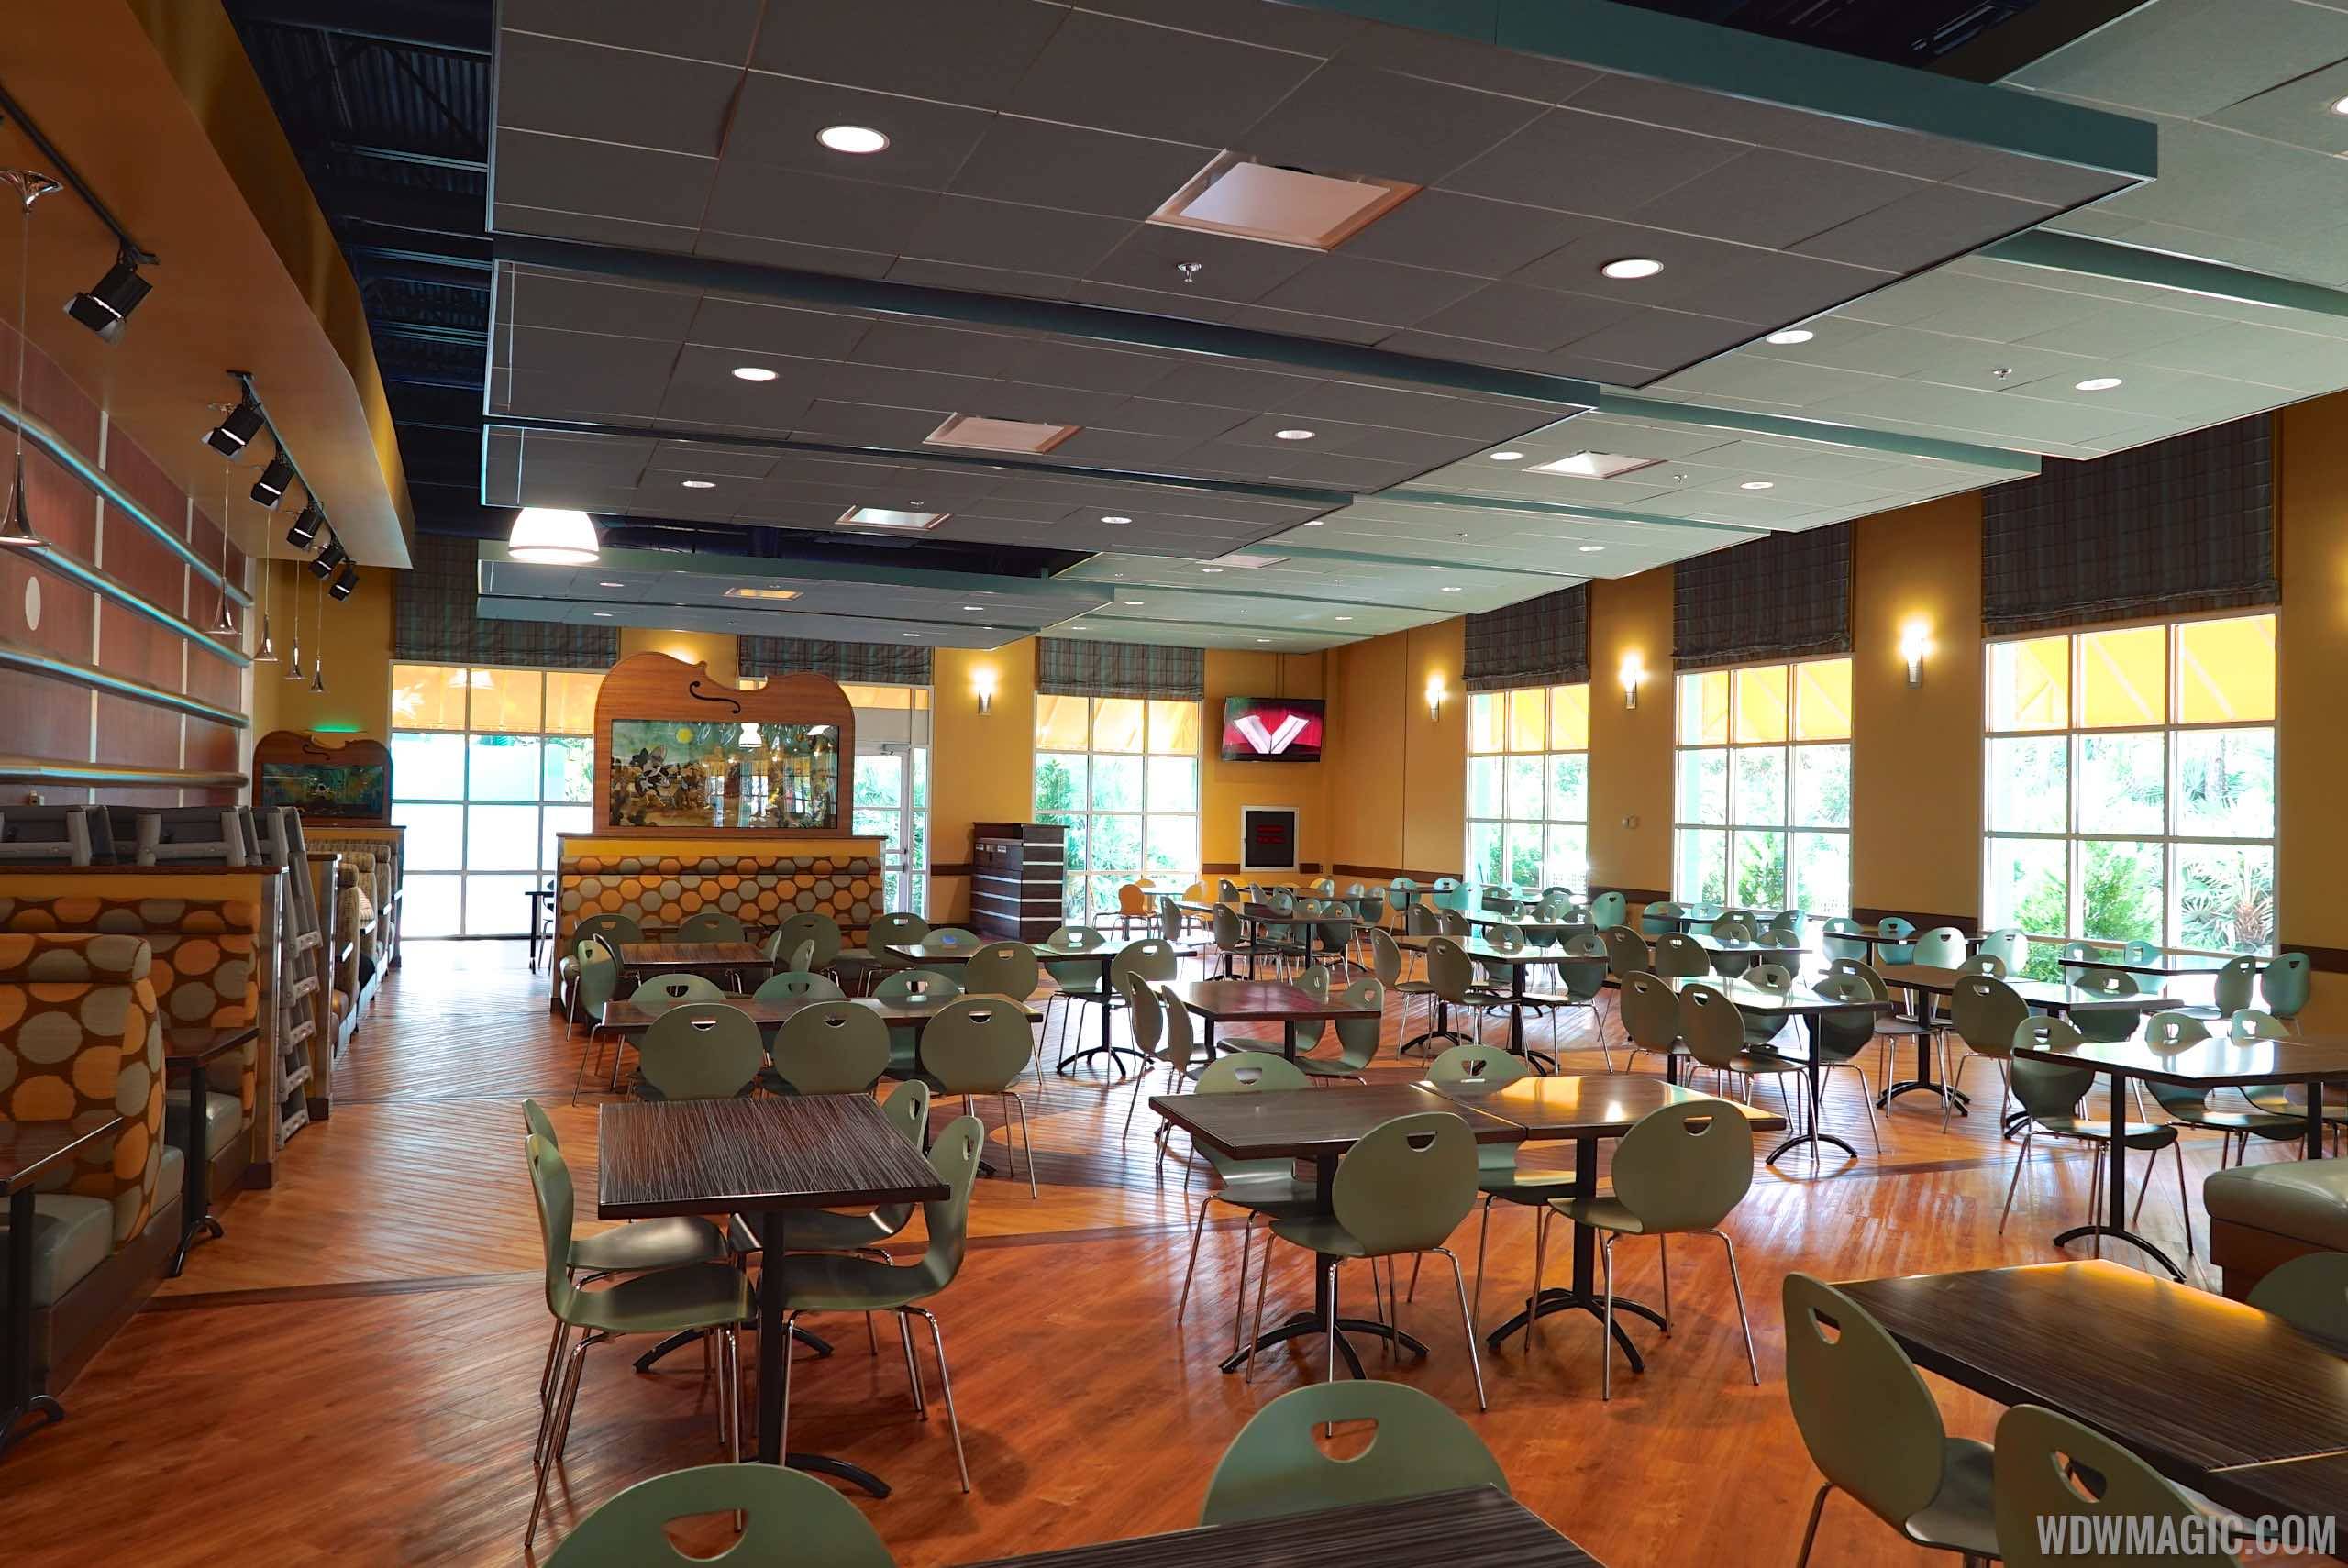 Disney's All Star Music Resort Intermission Food Court closing for major refurbishment later this summer